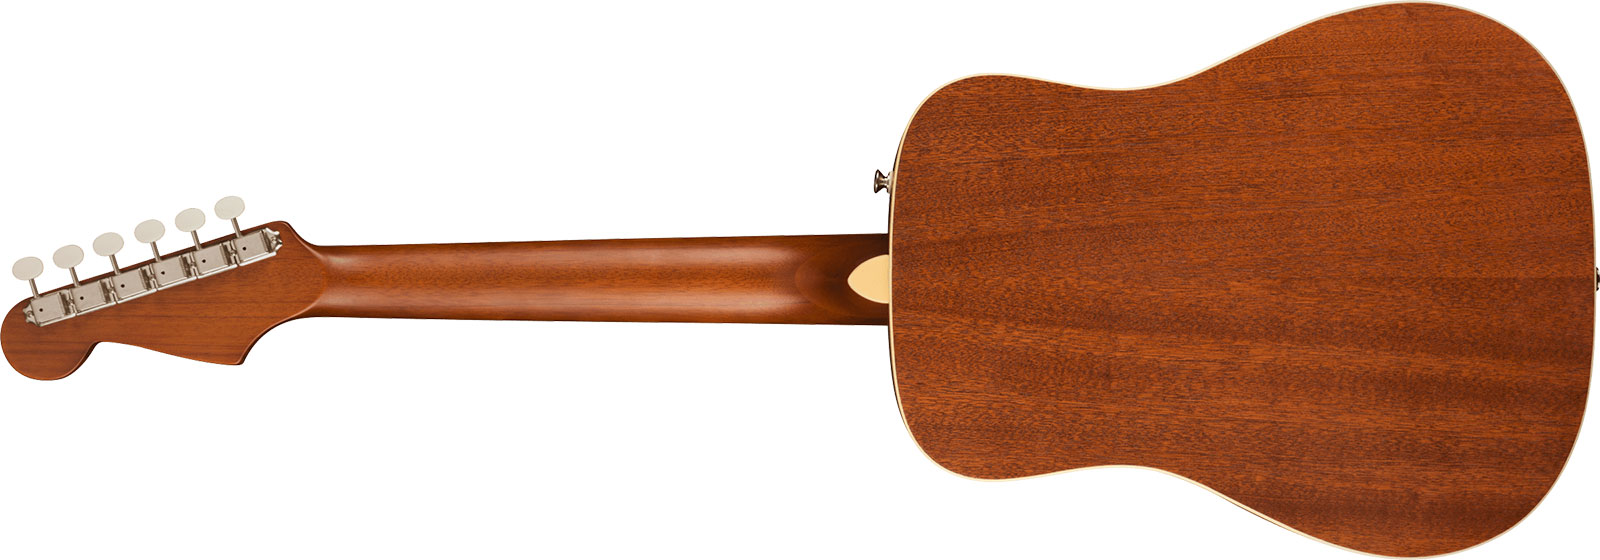 Fender Redondo Mini All Mahogany California Ltd Dreadnought 1/2 Tout Acajou Noy - Natural Satin - Guitare Acoustique Voyage - Variation 1